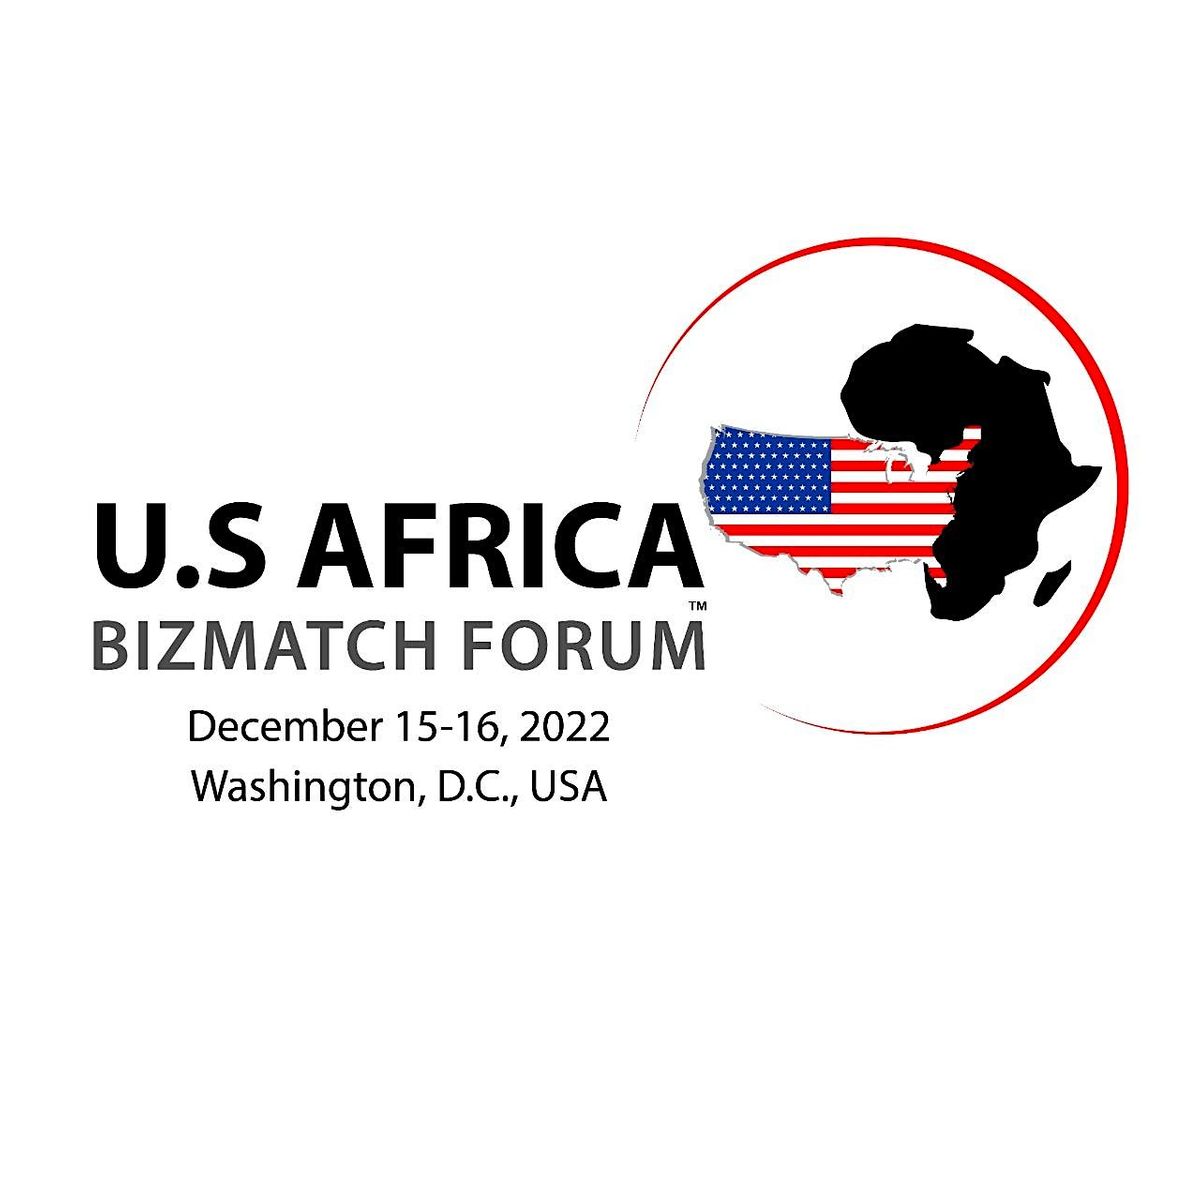 U.S Africa Bizmatch Forum 2022